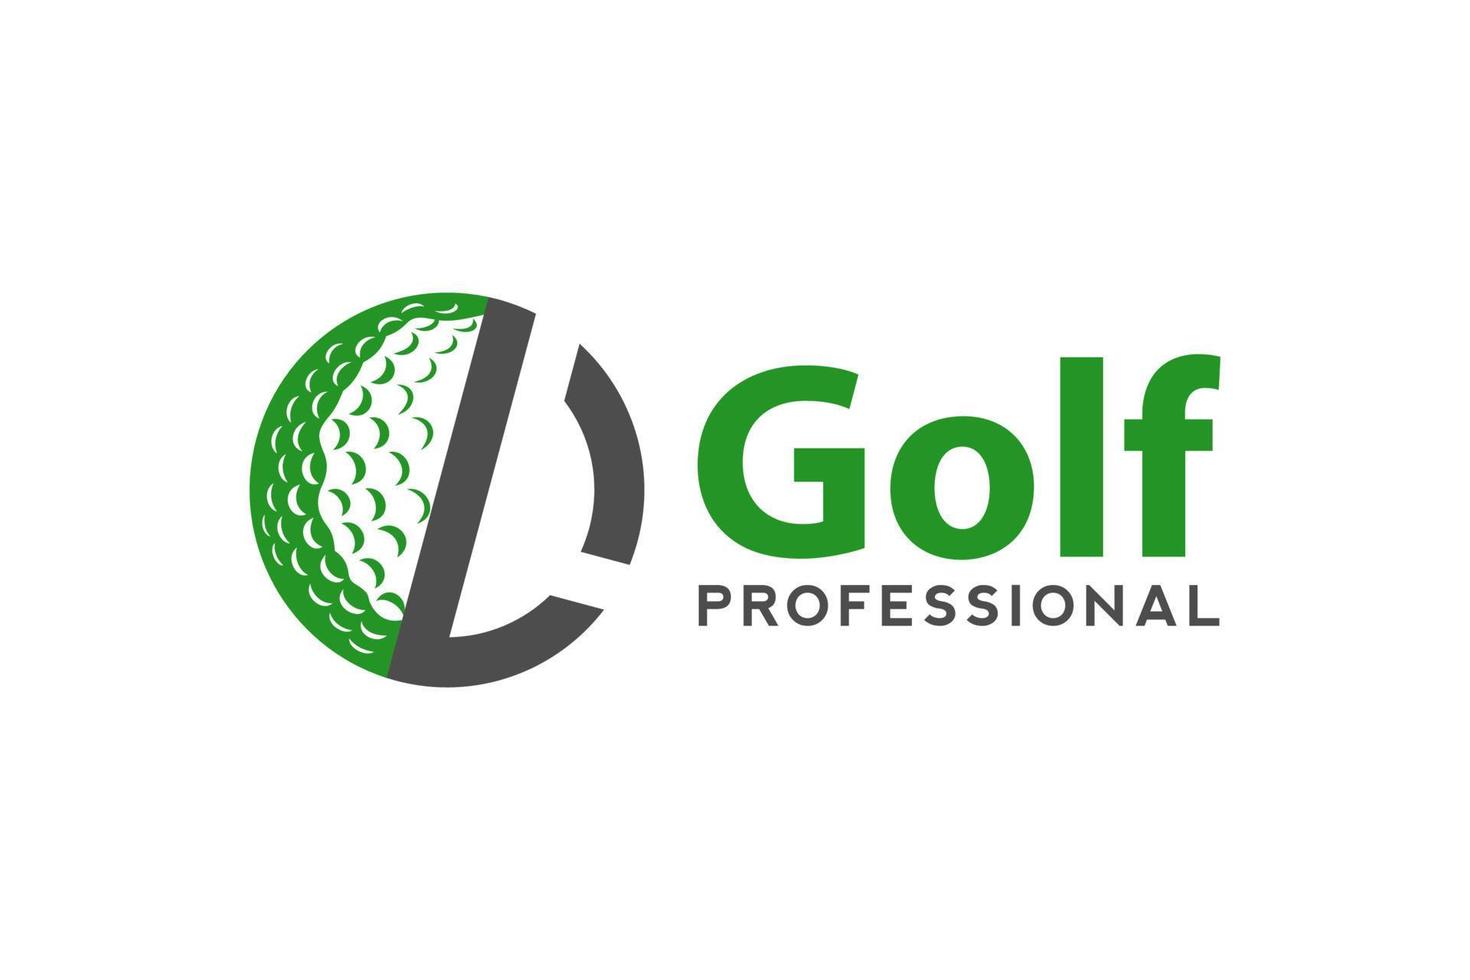 Letter L for Golf logo design vector template, Vector label of golf, Logo of golf championship, illustration, Creative icon, design concept